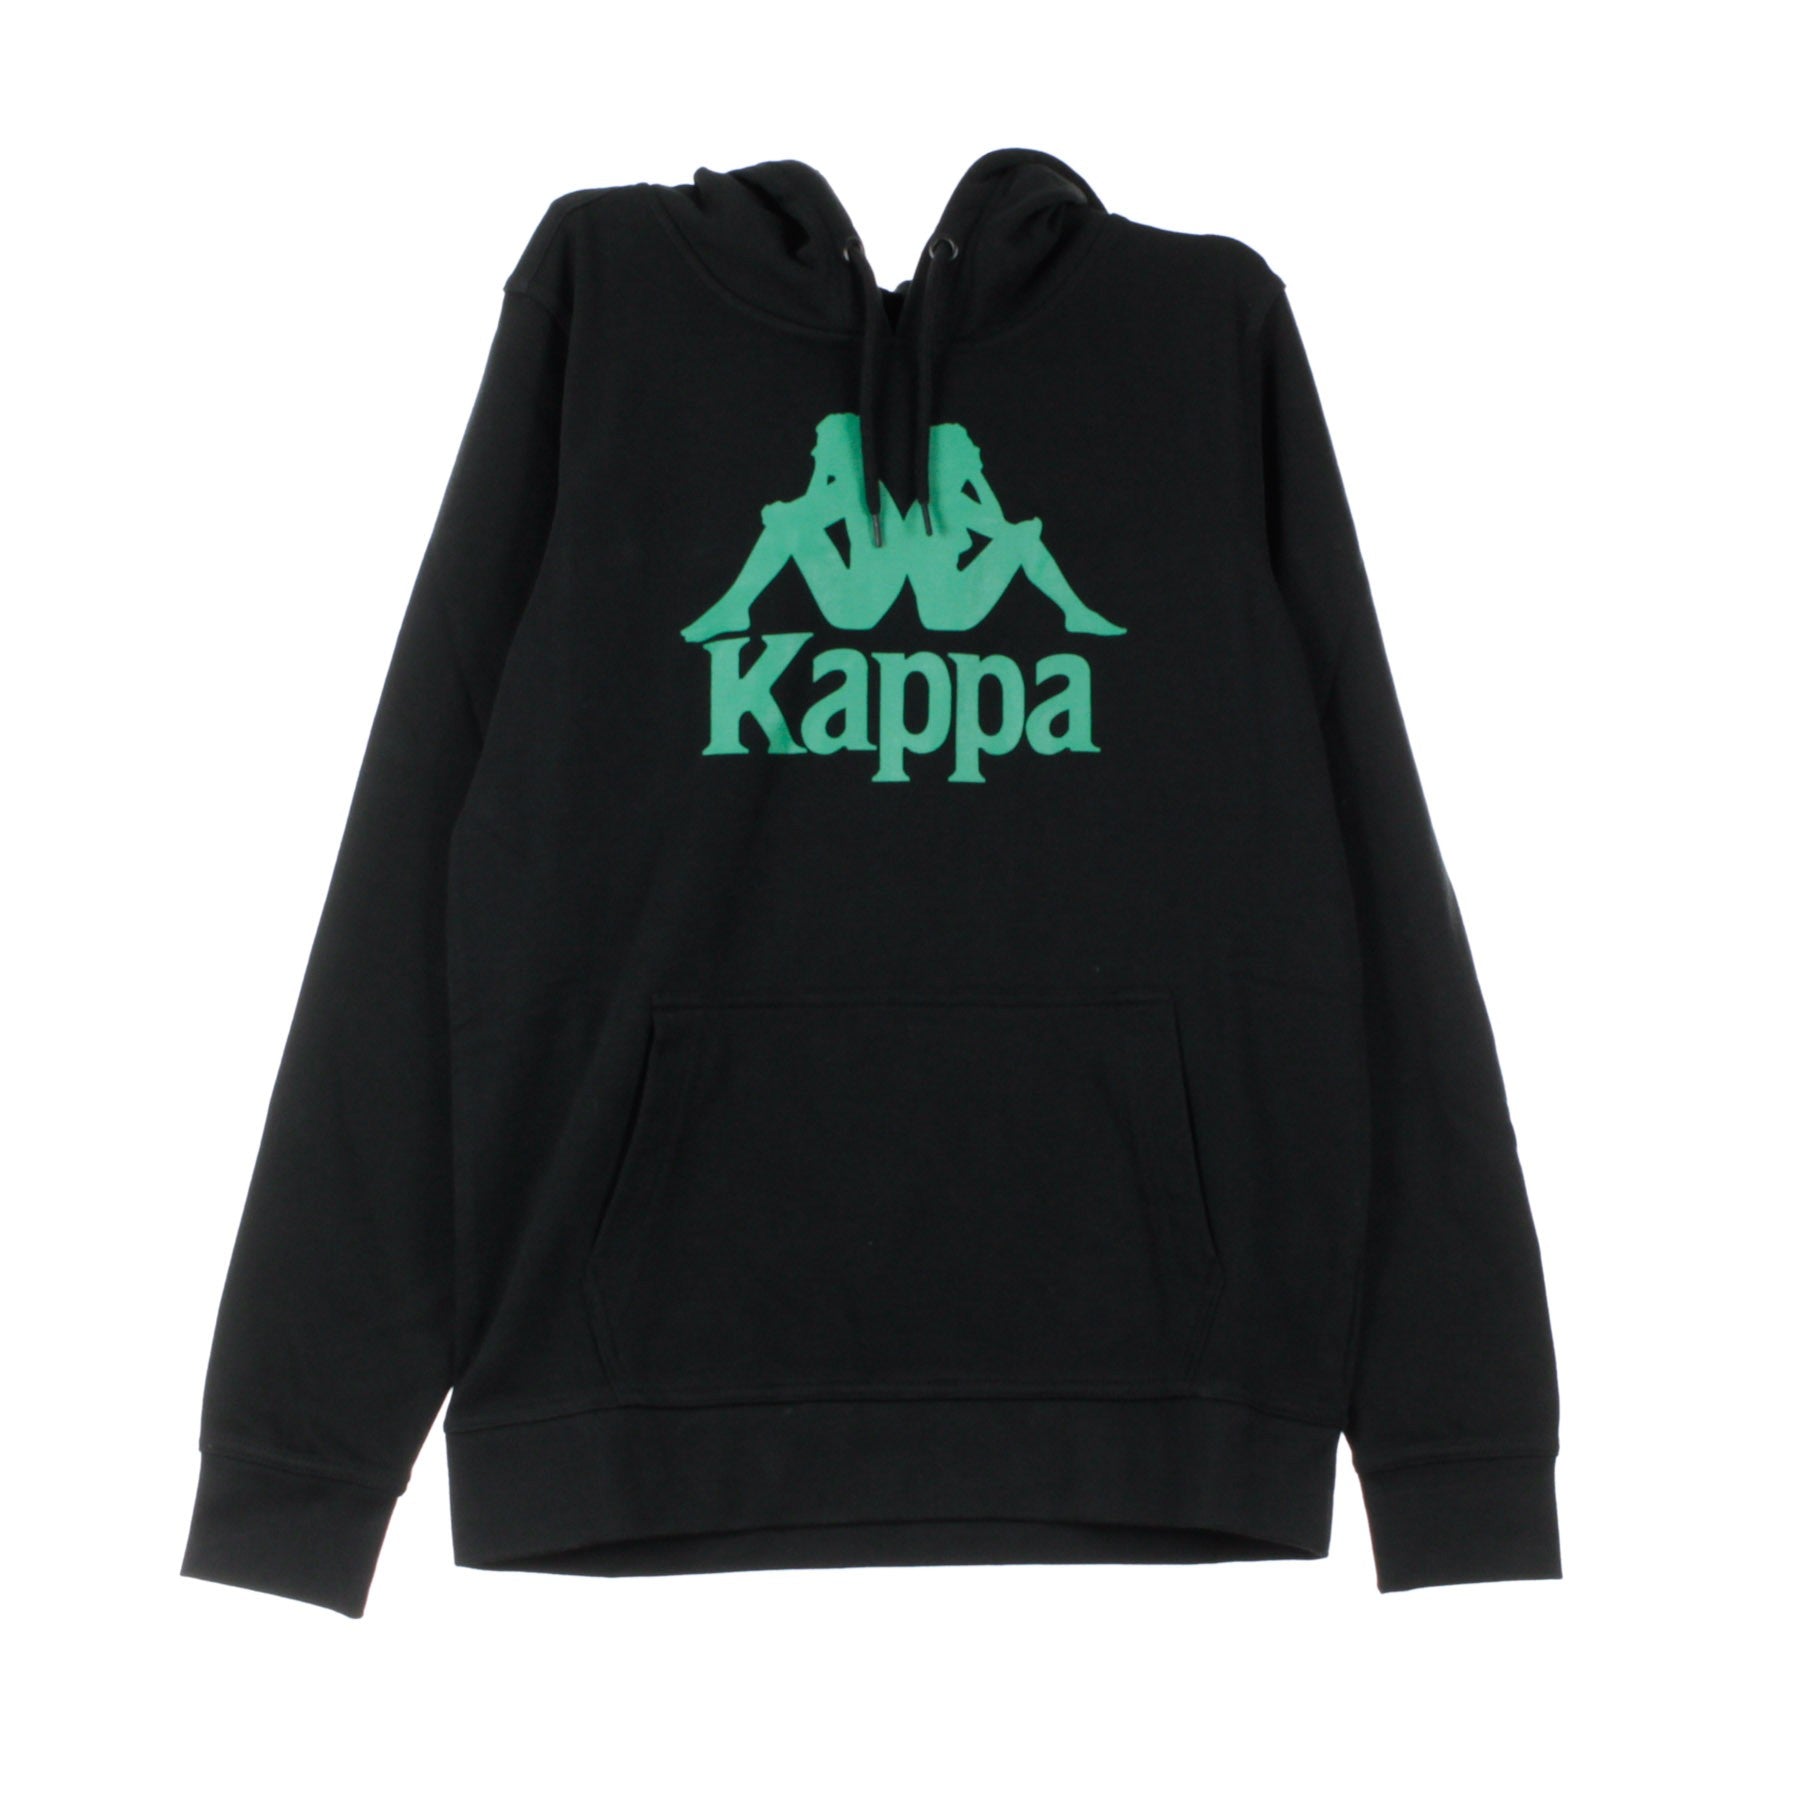 Kappa, Felpa Cappuccio Uomo Authentic Zimim, Black/green